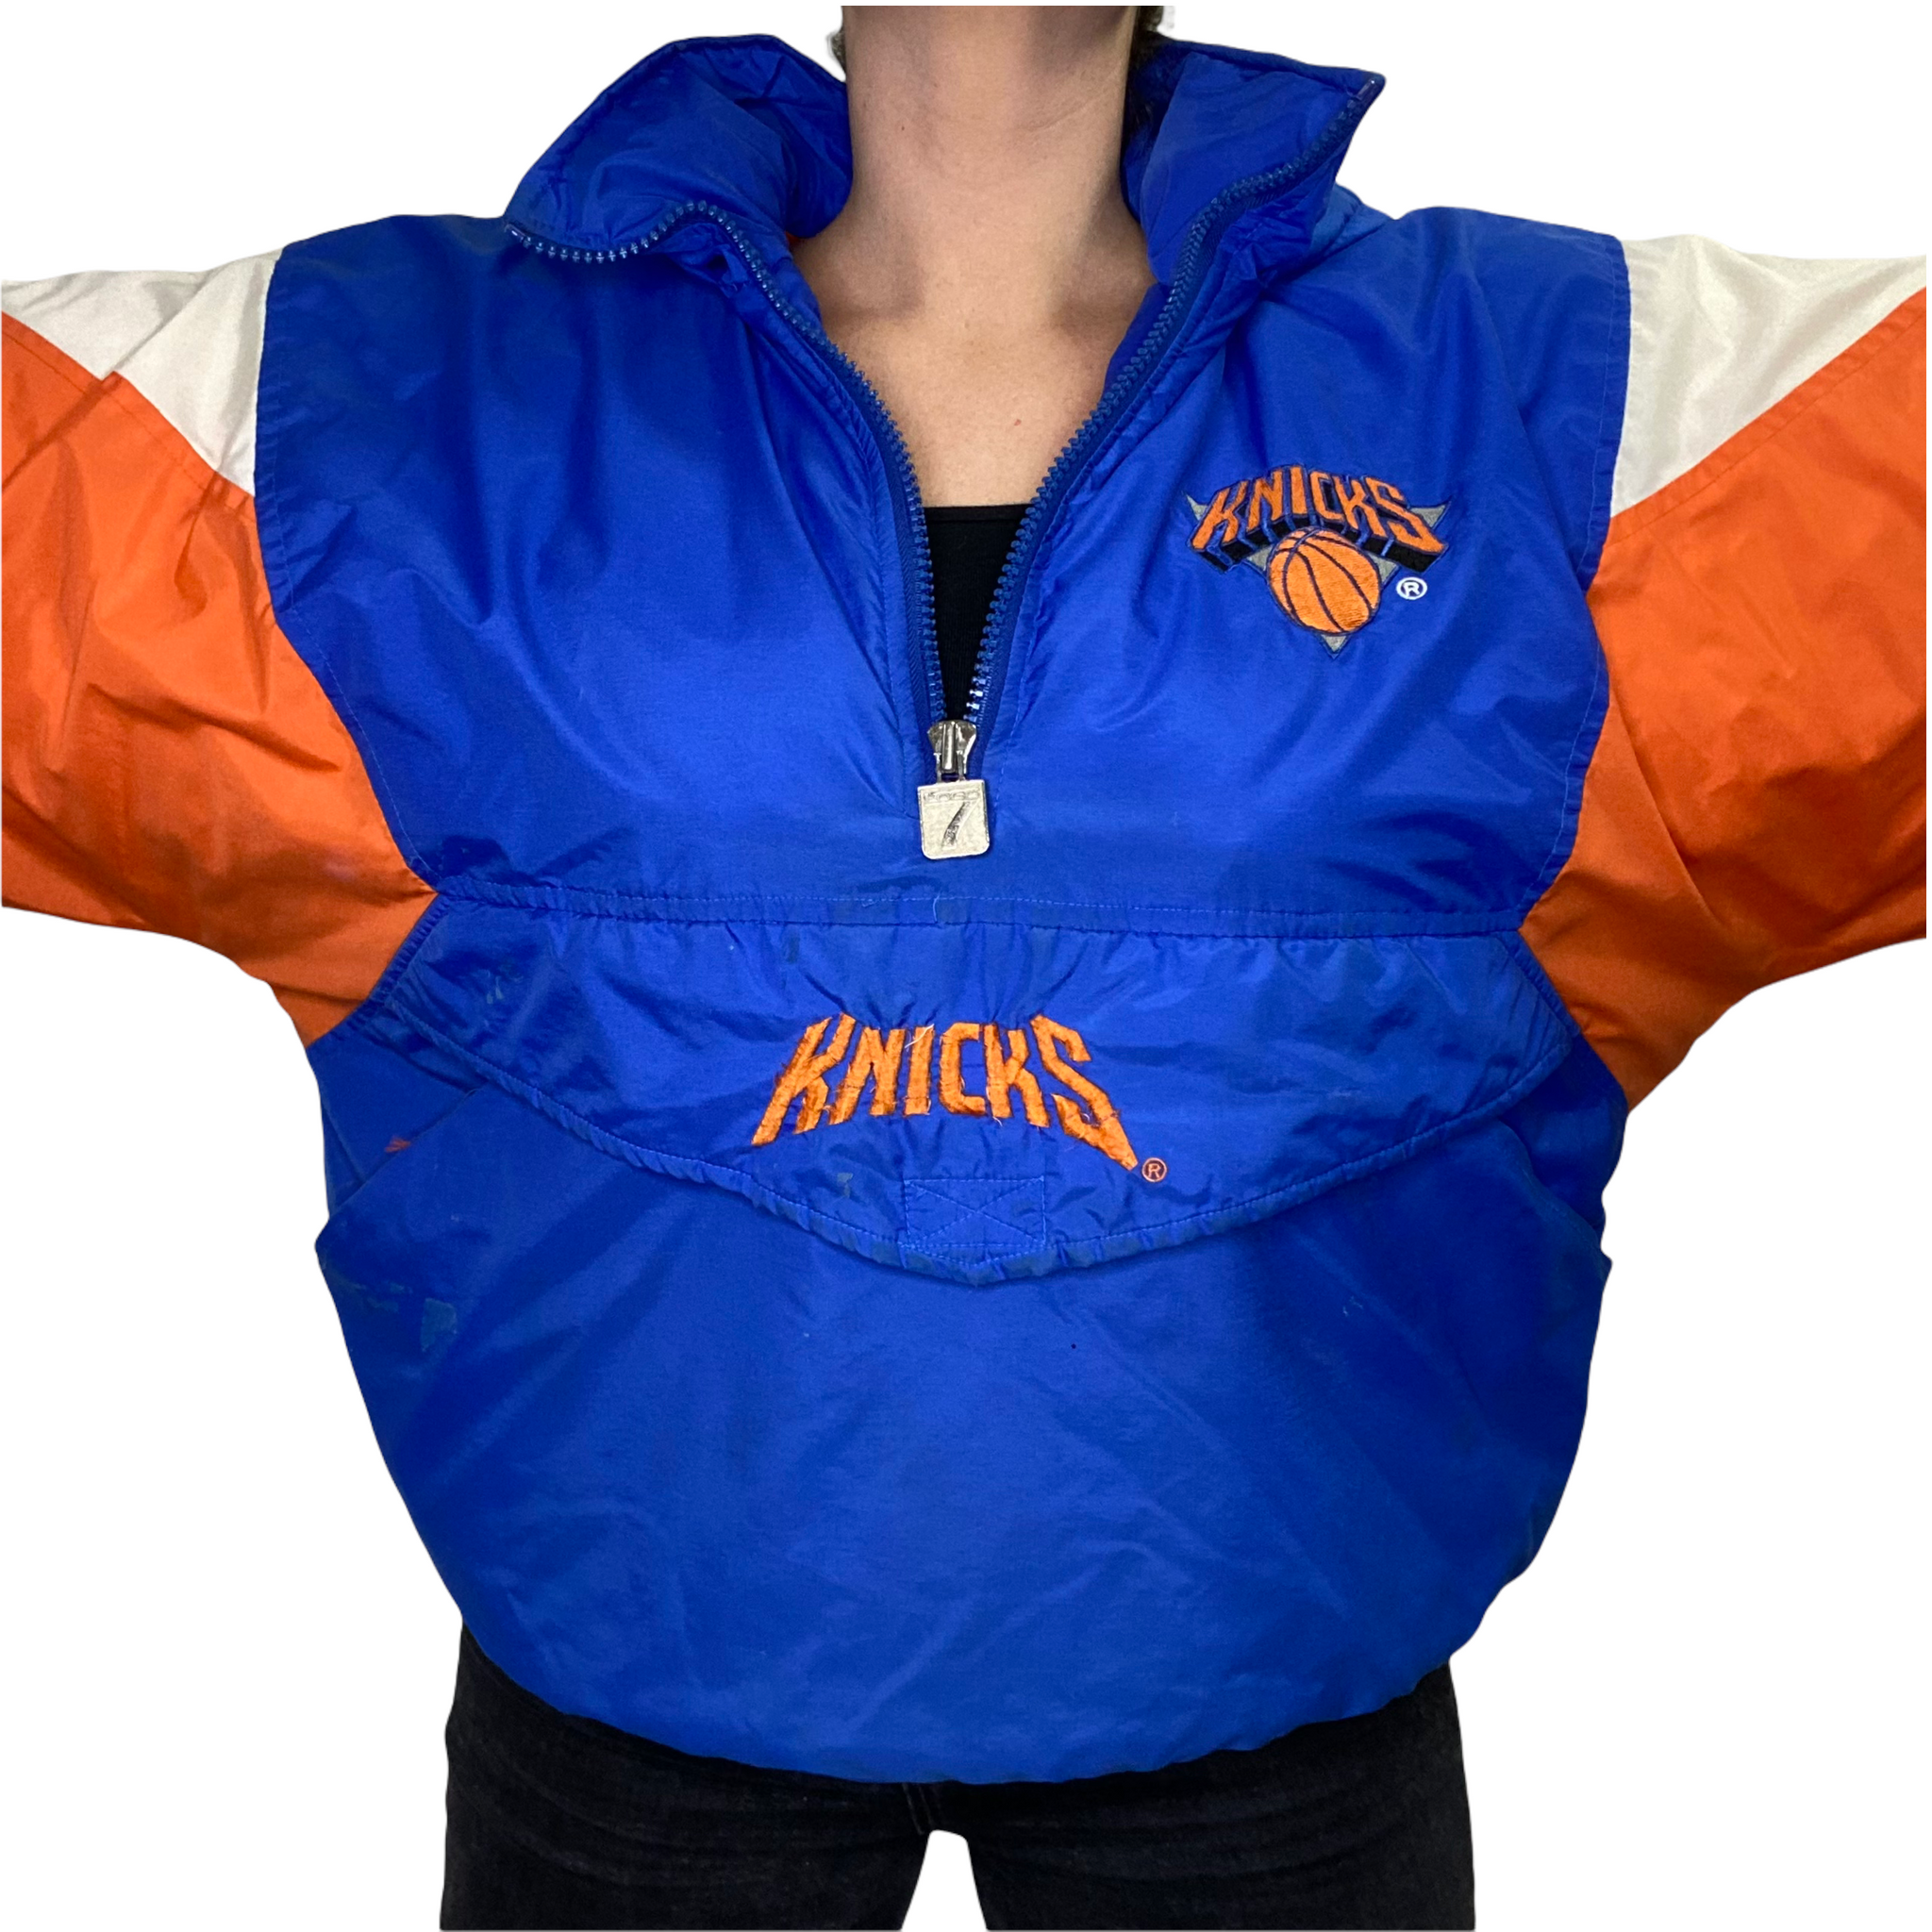 Vintage New York Knicks NBA Starter Jacket With HOOD Size Small